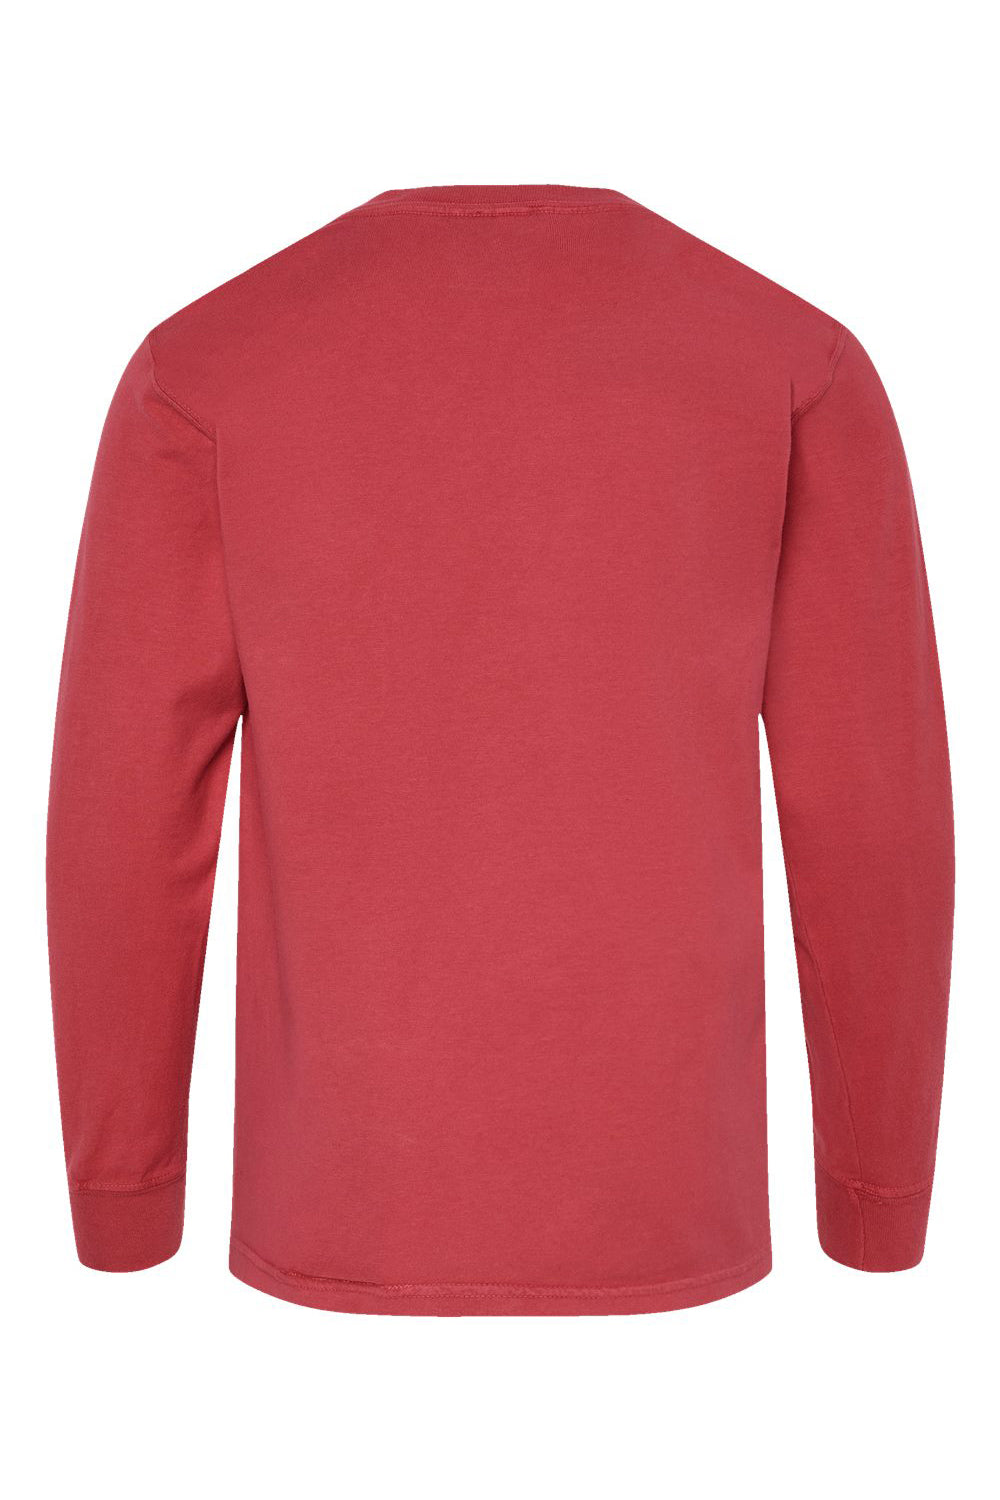 ComfortWash By Hanes GDH275 Youth Garment Dyed Long Sleeve Crewneck T-Shirt Crimson Fall Red Flat Back